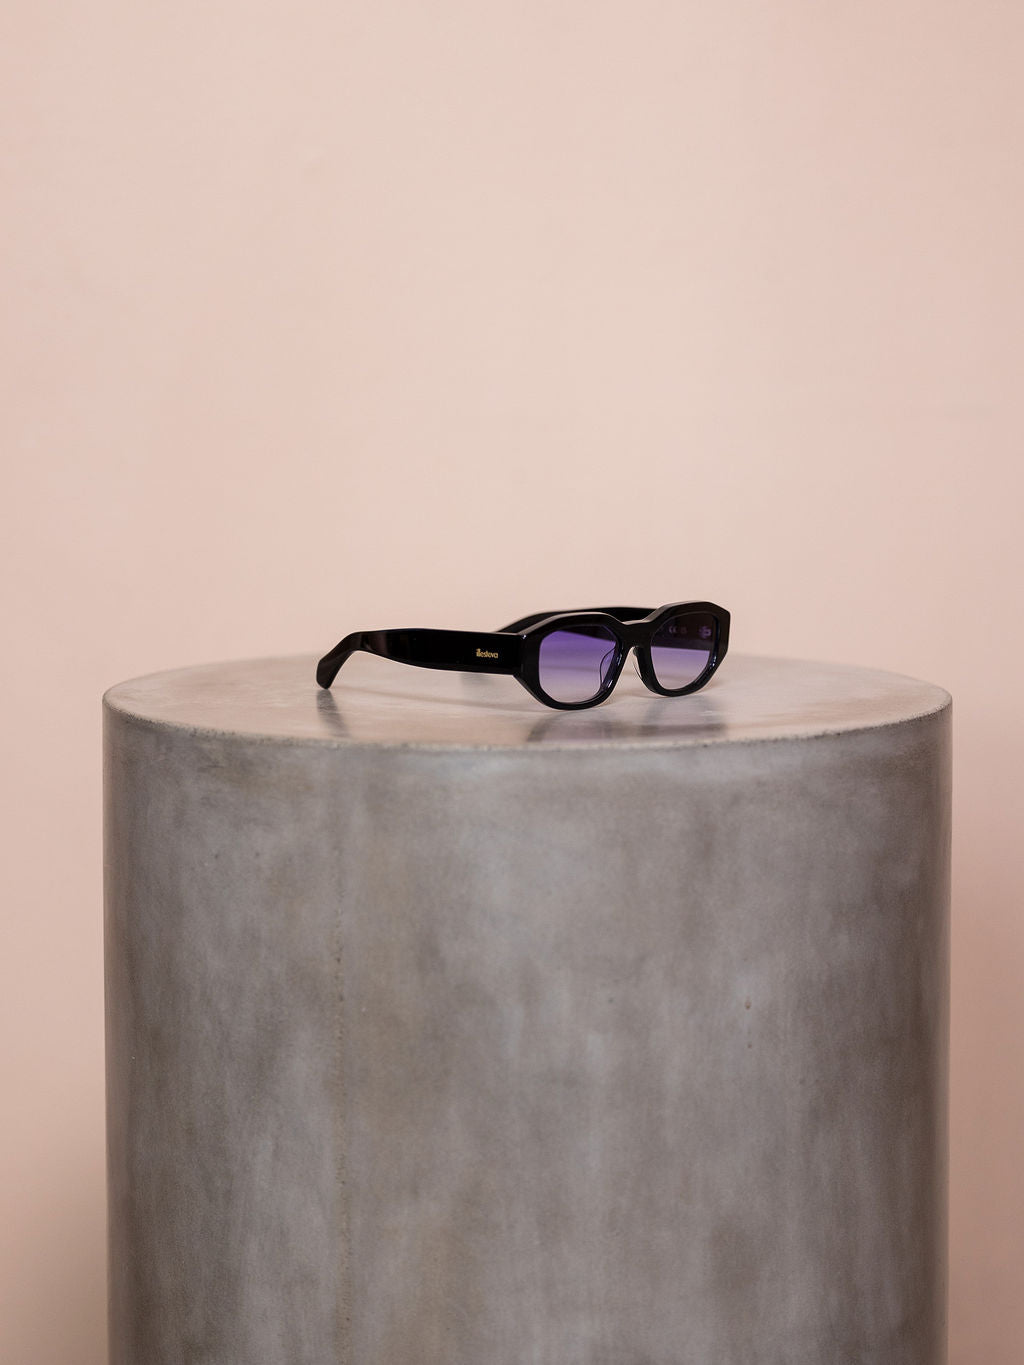 Black sunglasses on podium against pink background